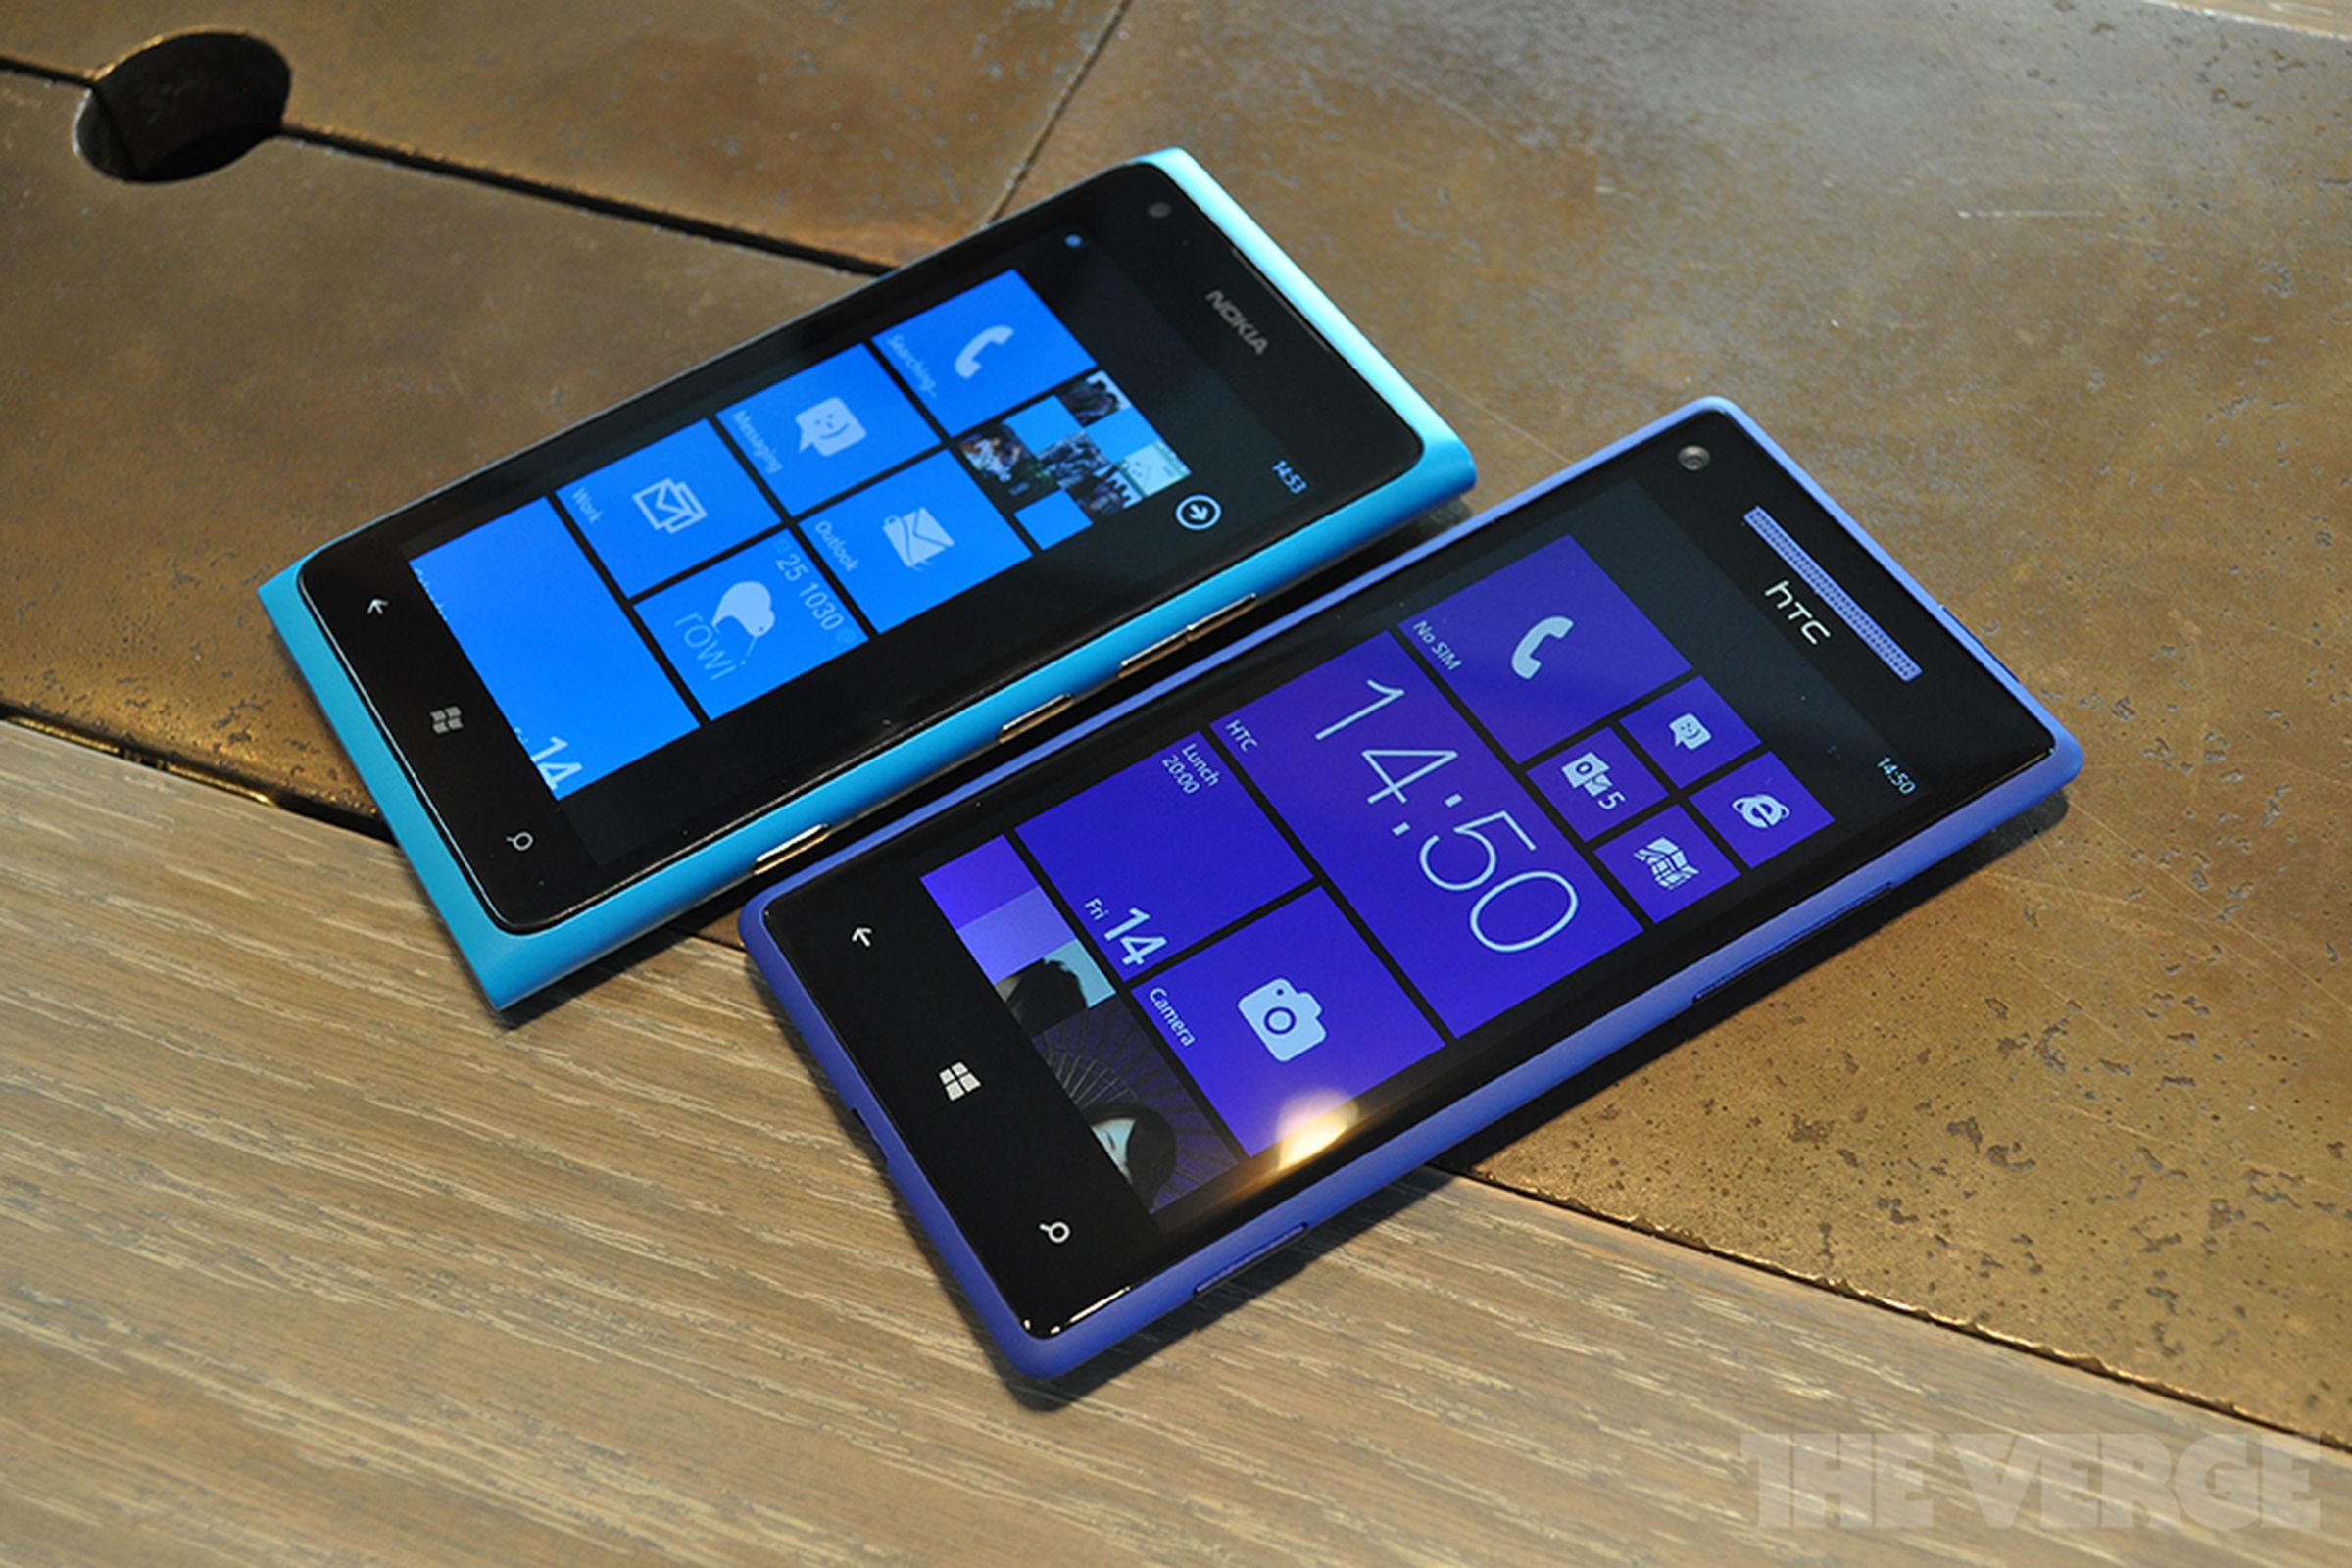 Gallery Photo: Windows Phone 8X hands-on photos